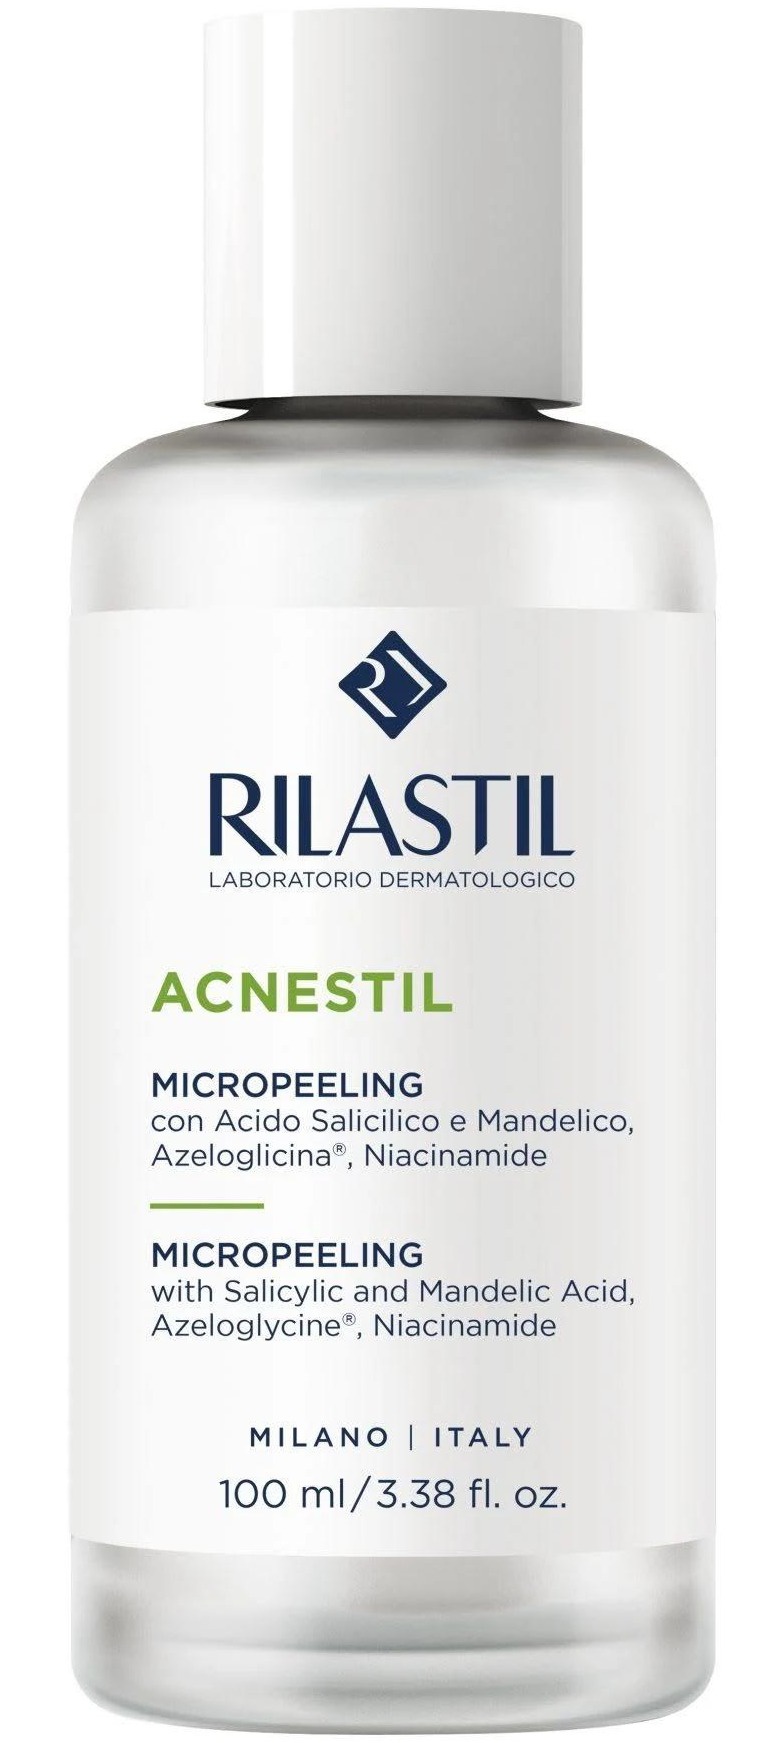 Rilastil Acnestil Micropeeling